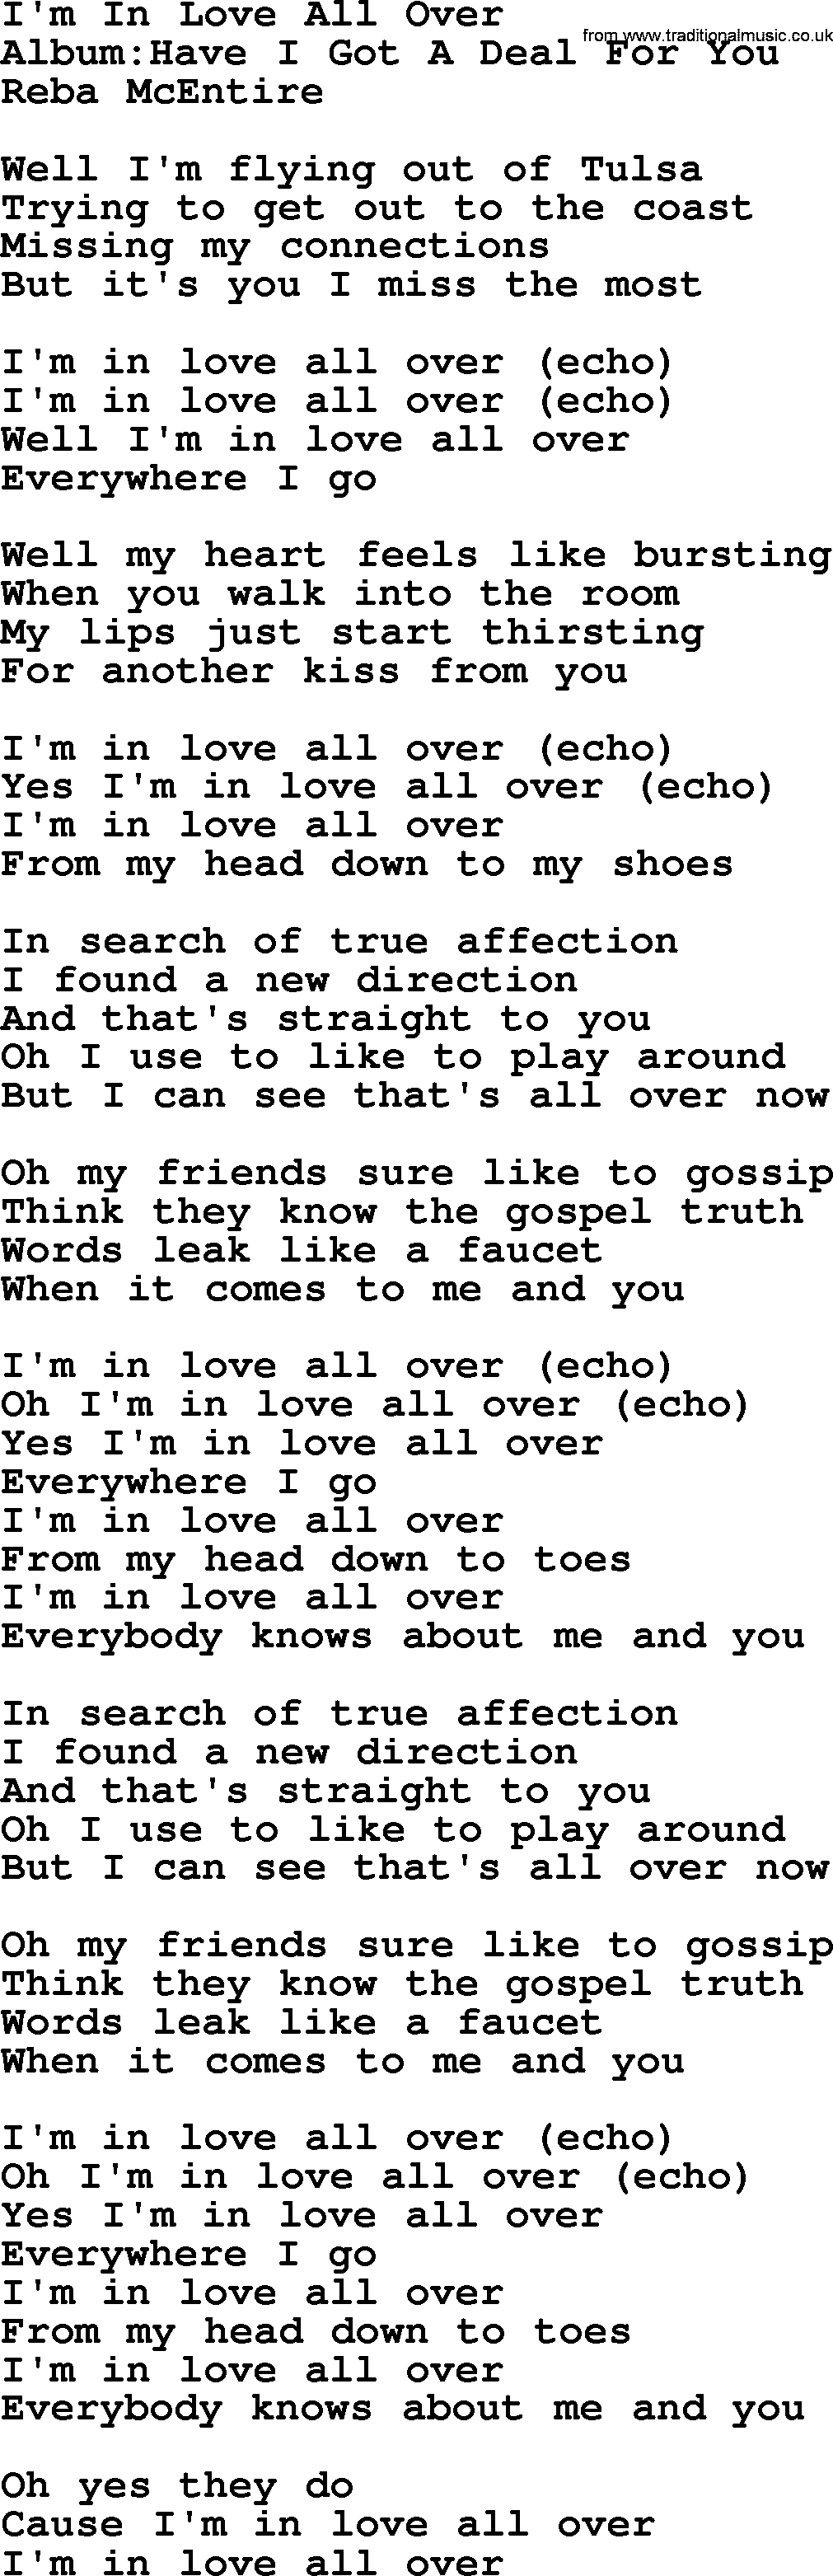 Reba McEntire song: I'm In Love All Over lyrics